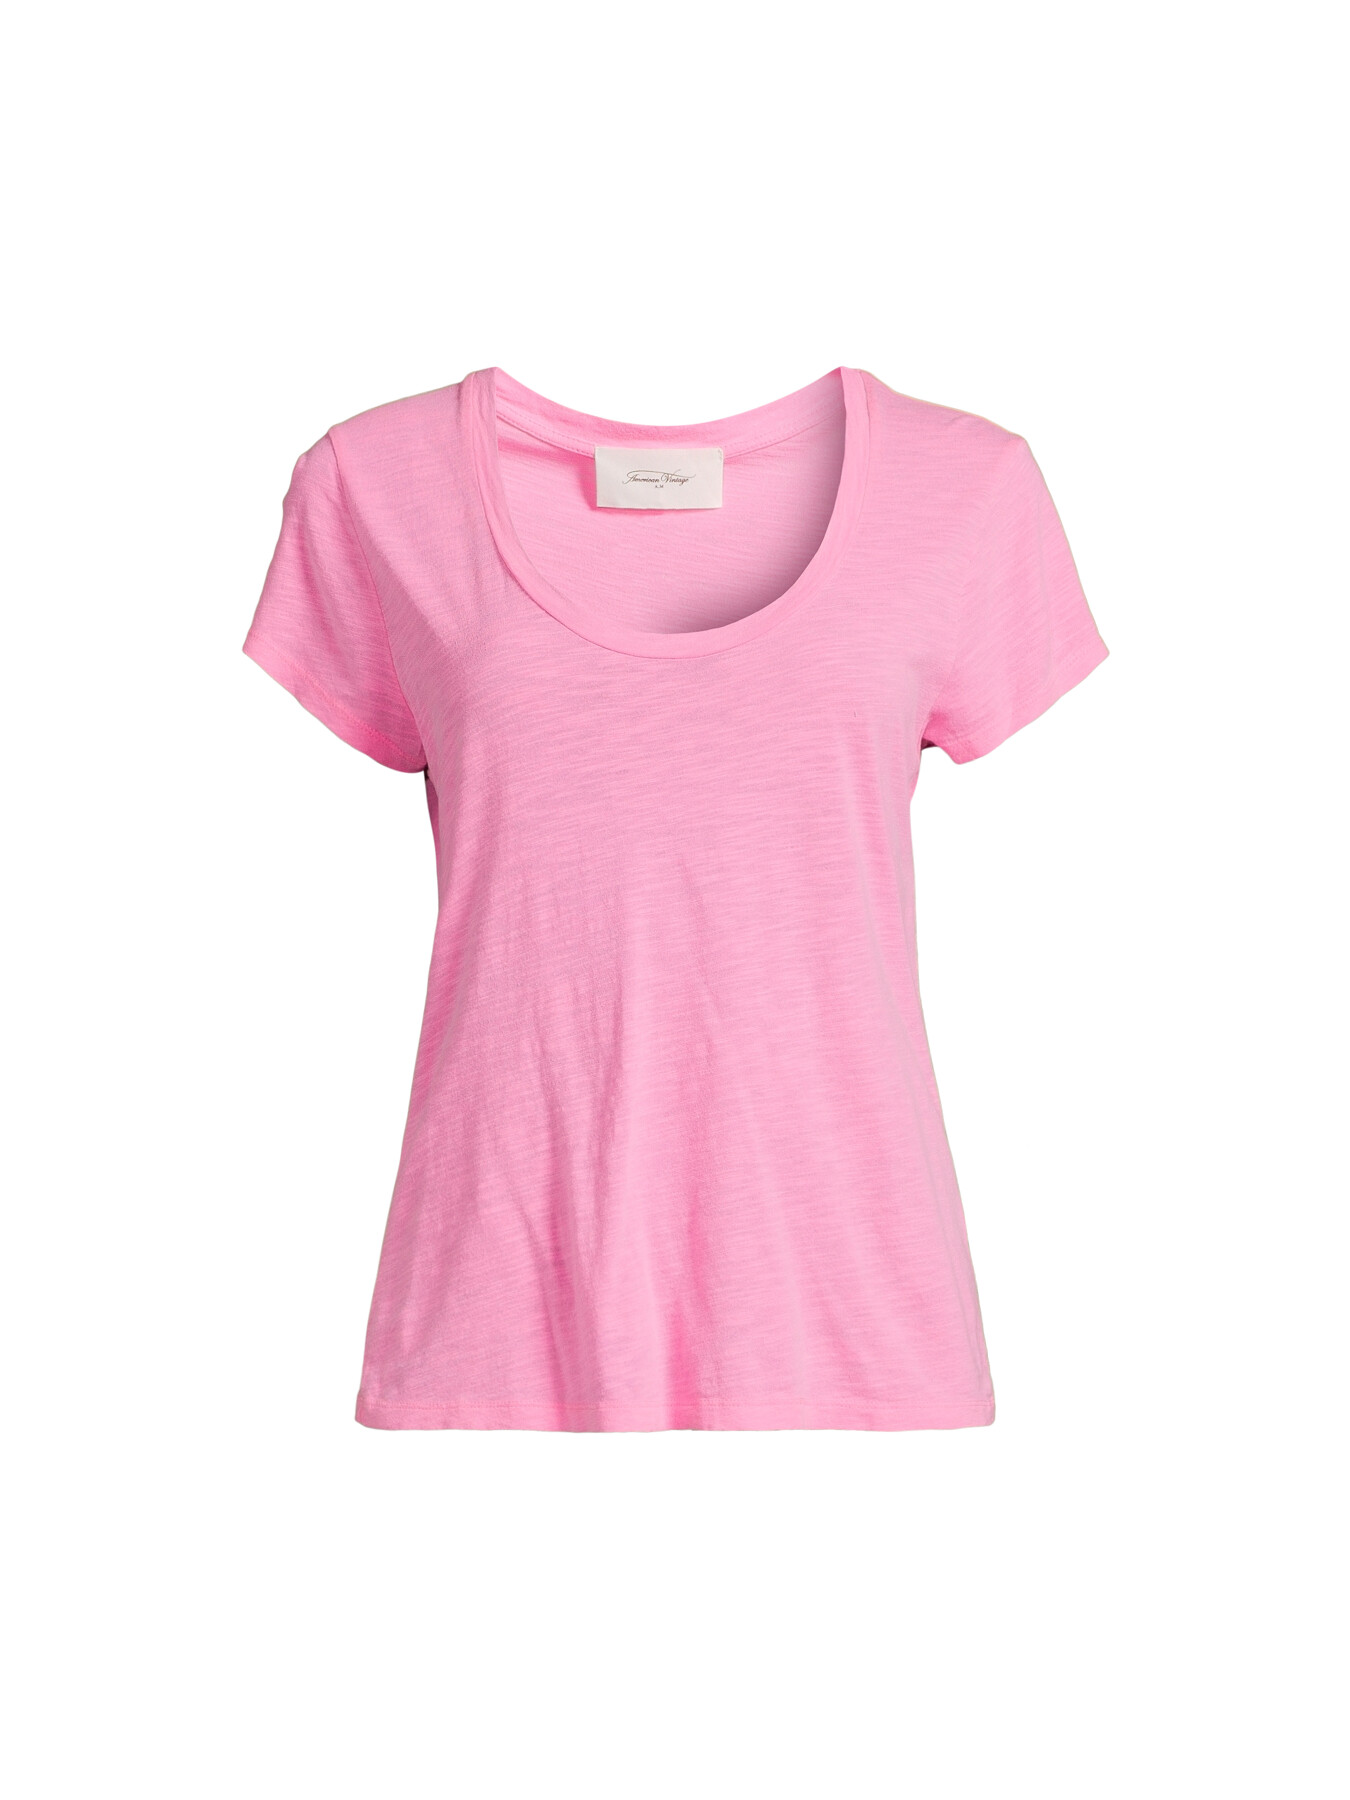 American Vintage Women's Jacksonville Scoop Neck T-shirt Pink